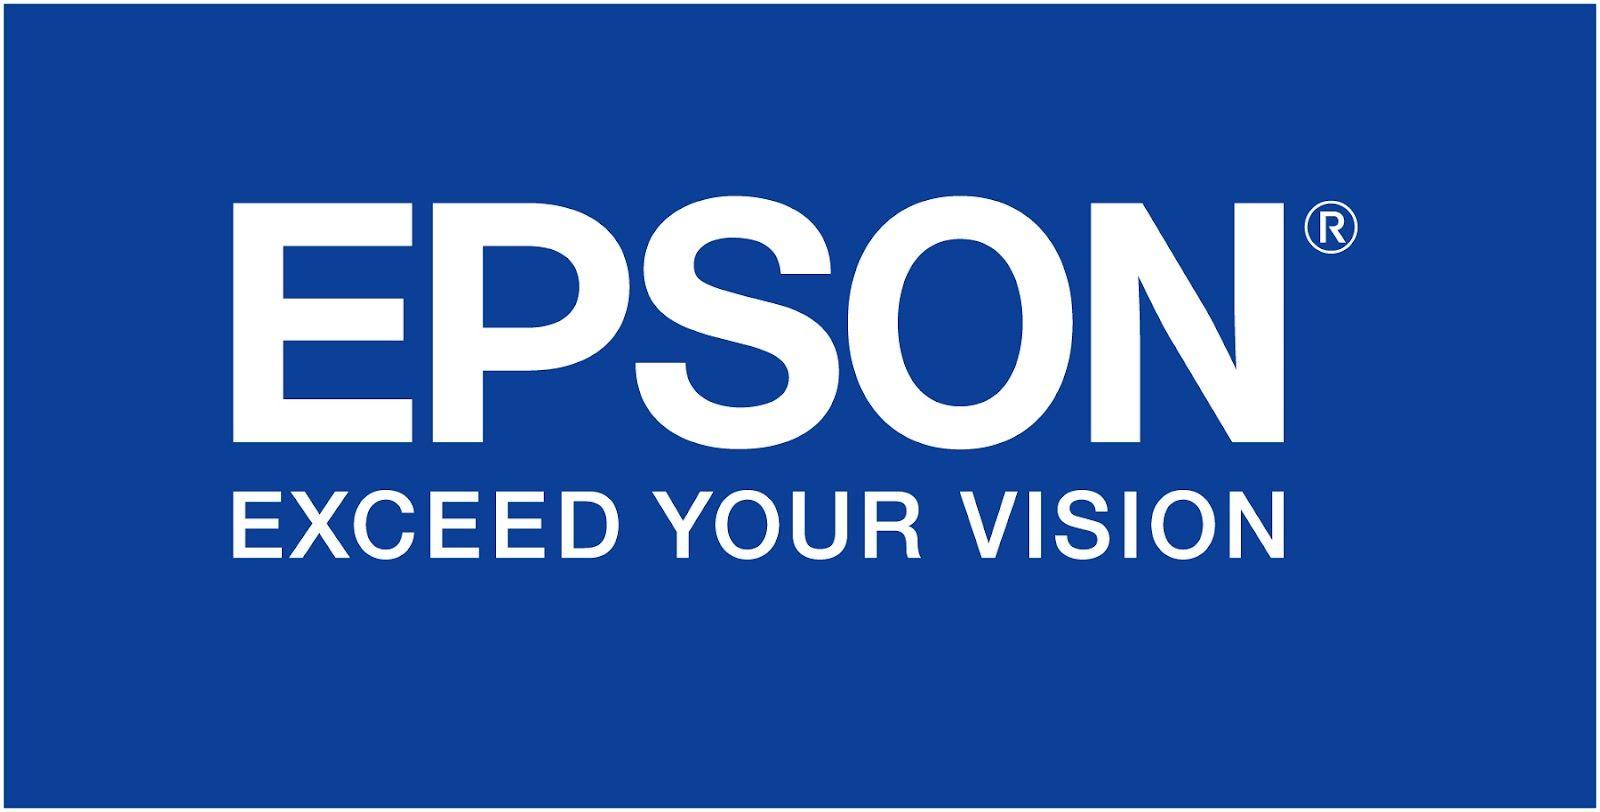 Seiko Epson Corporation Logo - AAAAA Group: Epson Company to Mark Its 70th Anniversary